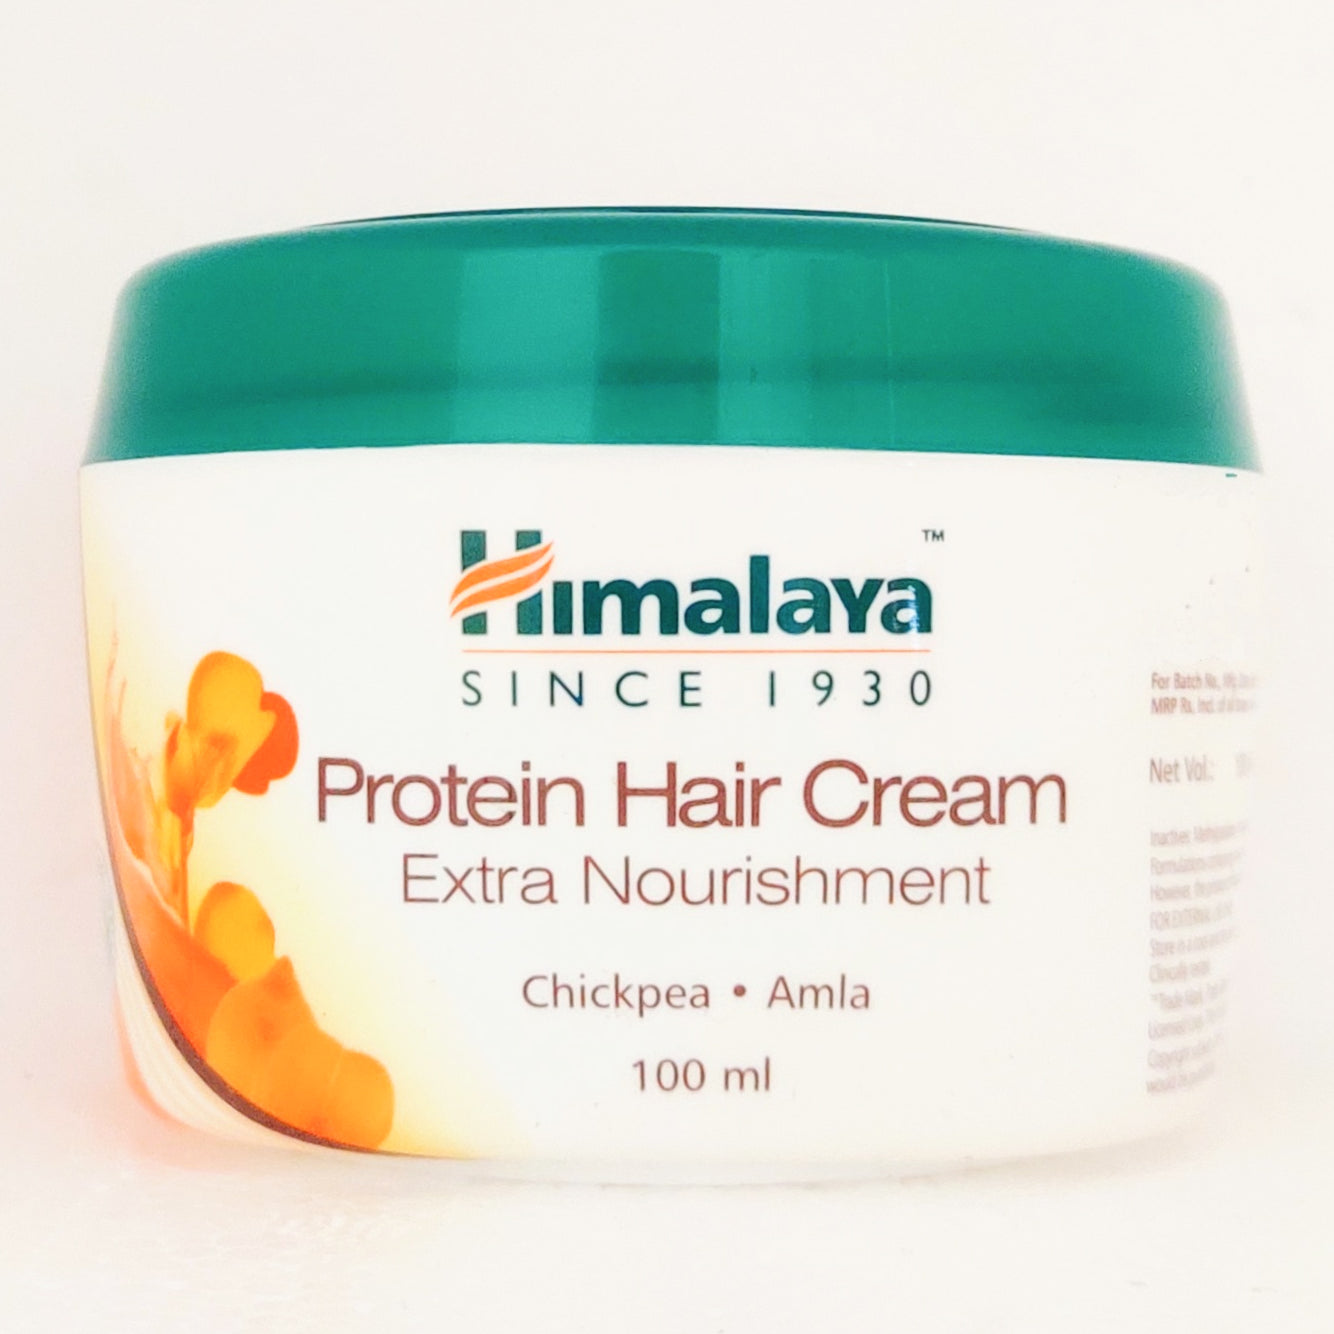 Shop Himalaya protein hair cream 100ml at price 80.00 from Himalaya Online - Ayush Care